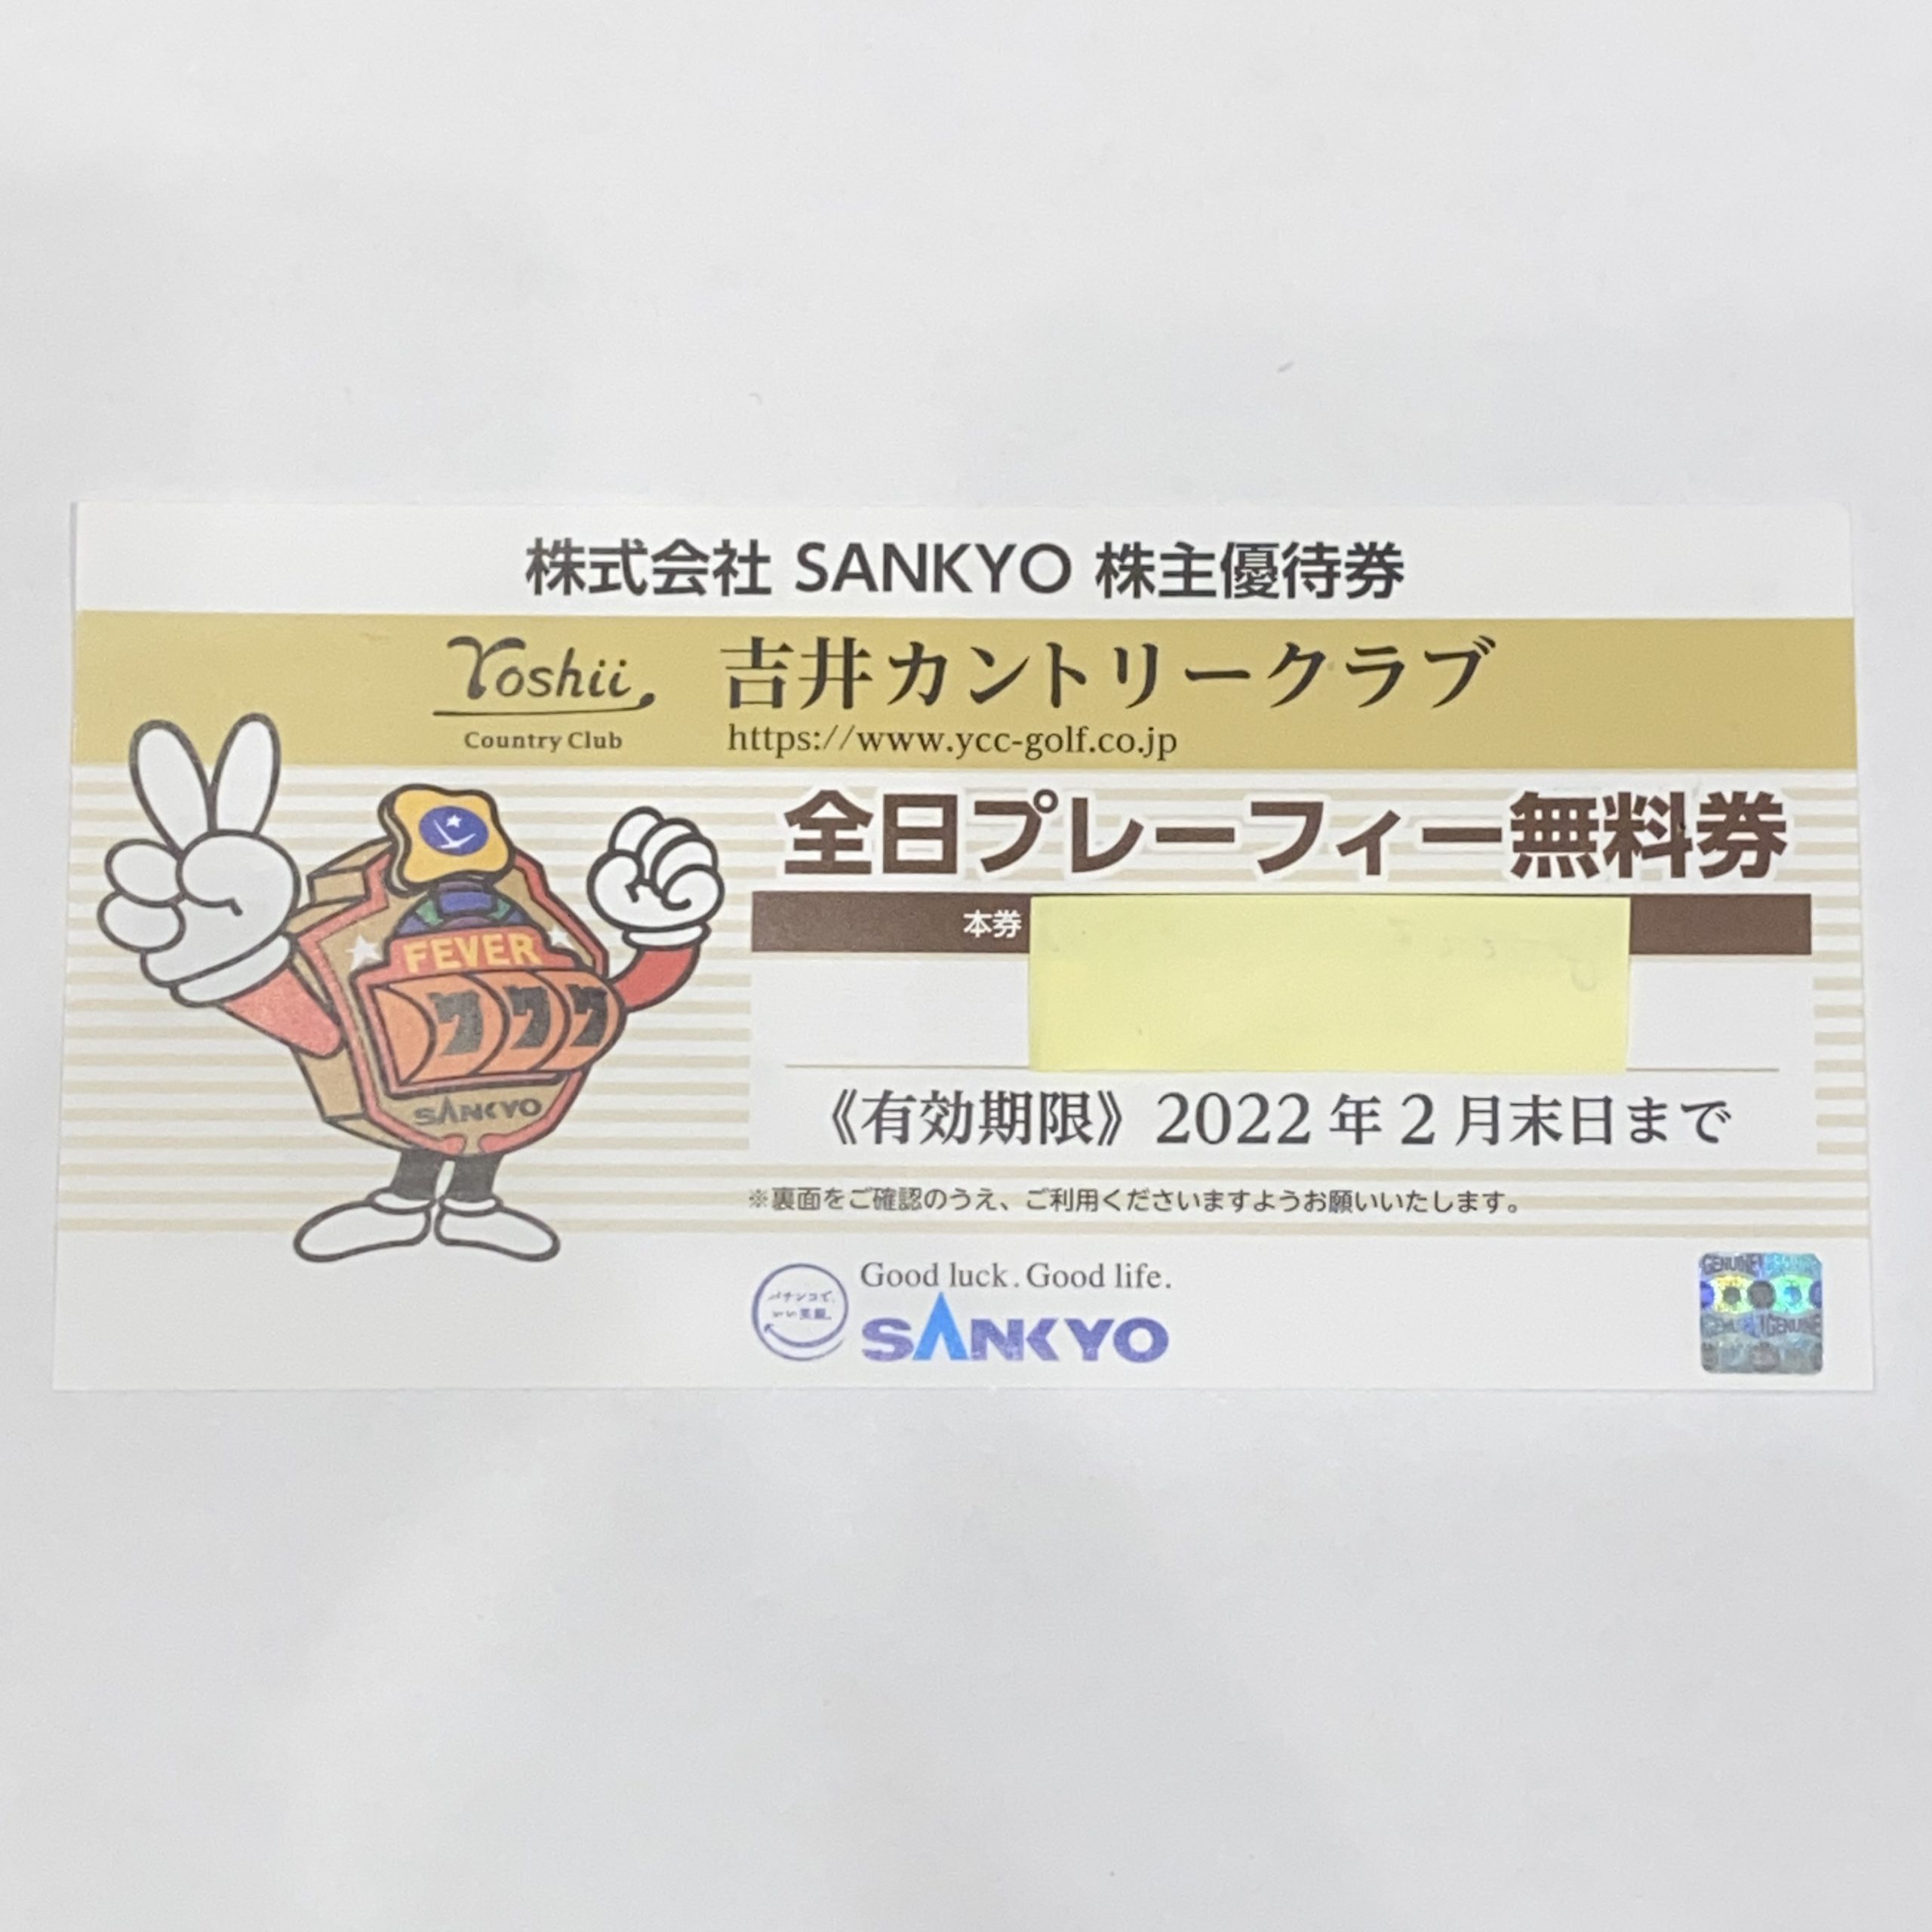 【SANKYO/サンキョー】吉井カントリークラブ 全日プレーフィー無料券 2022年2月末日まで